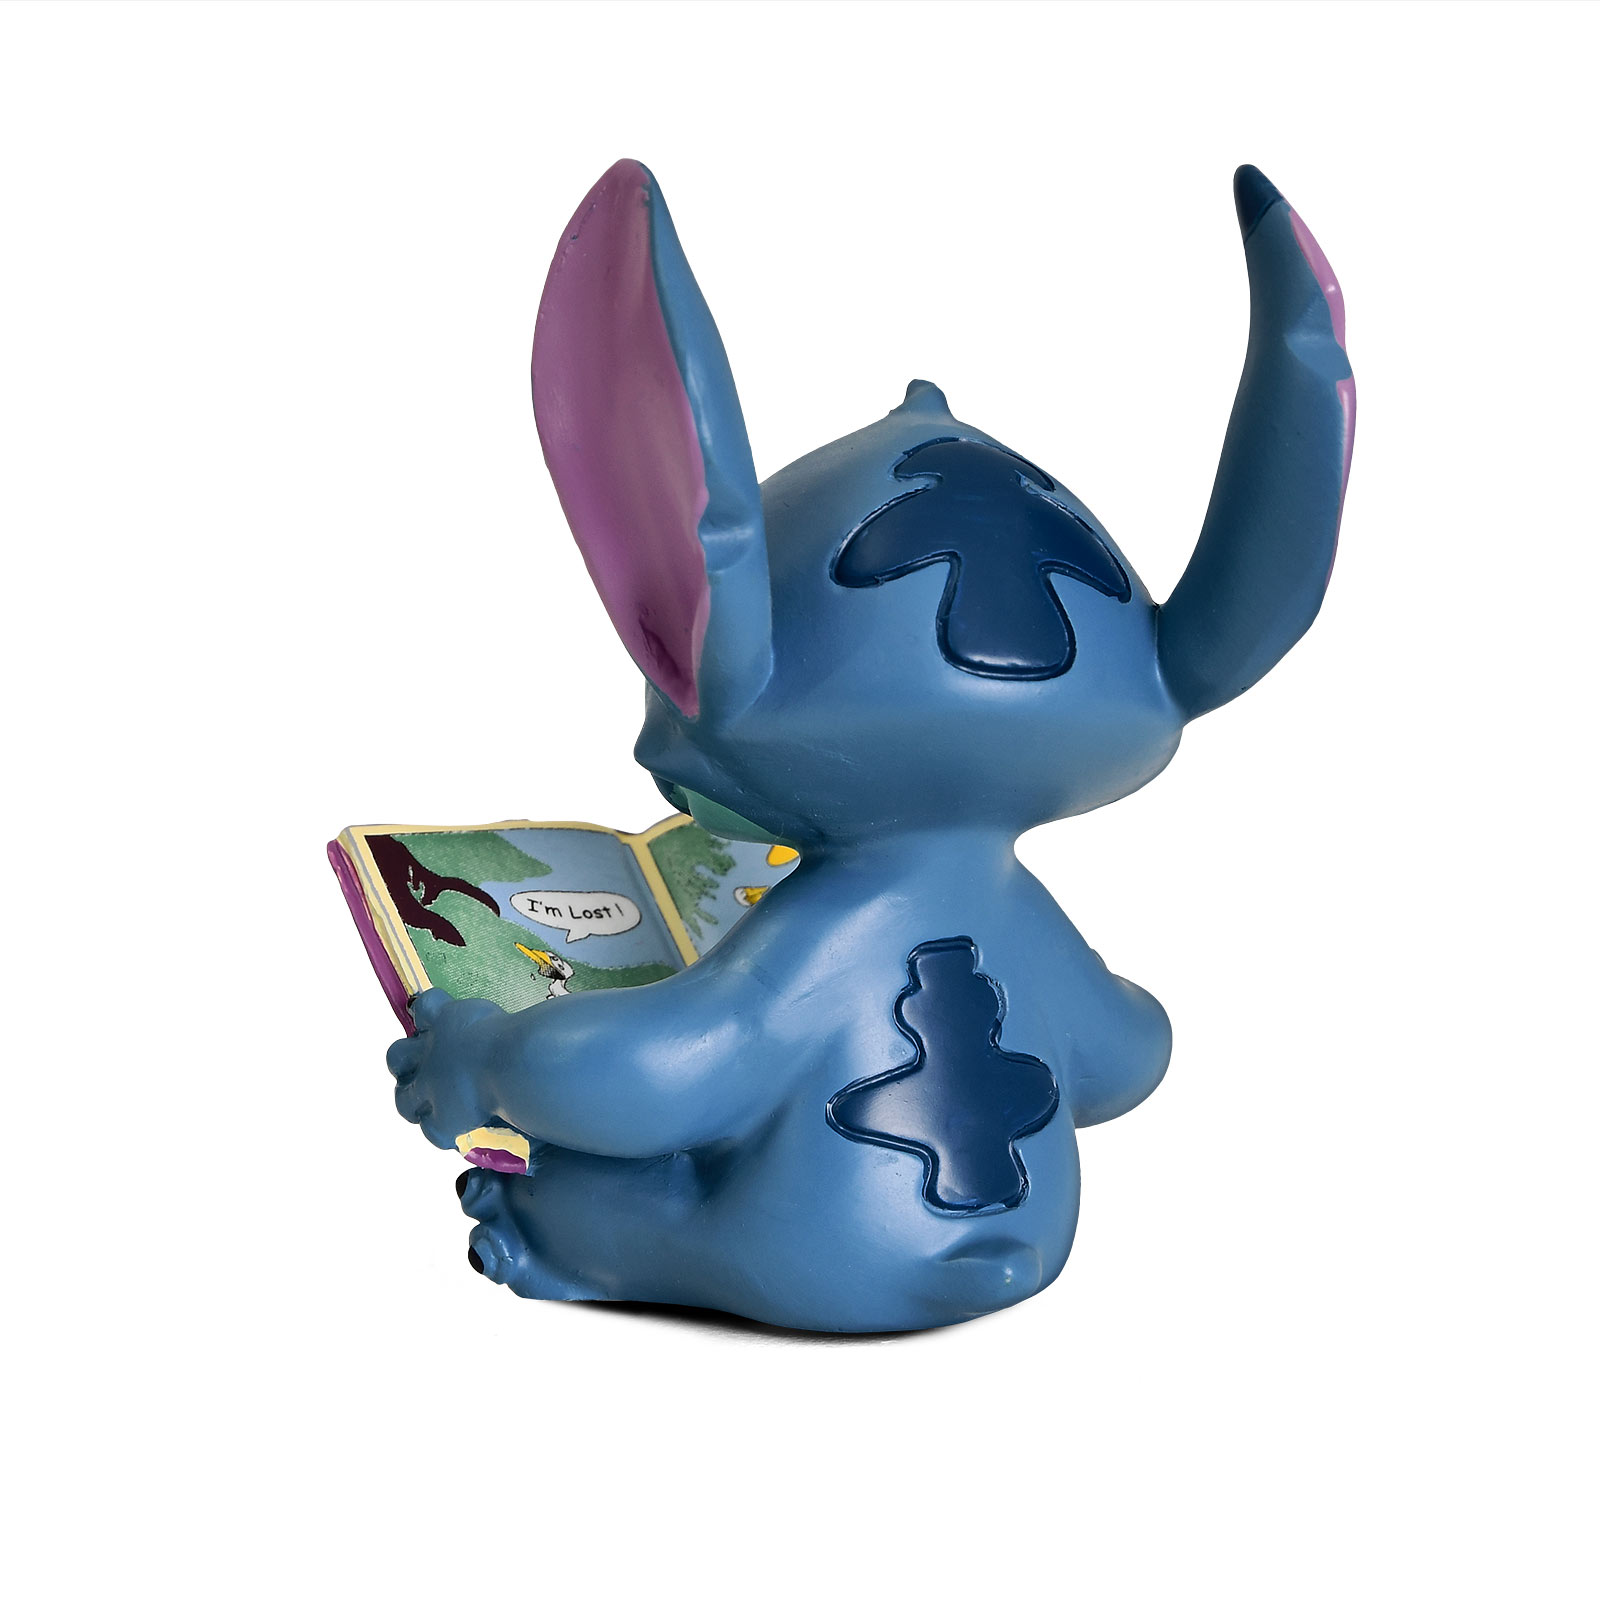 Lilo & Stitch - Stitch with book figure